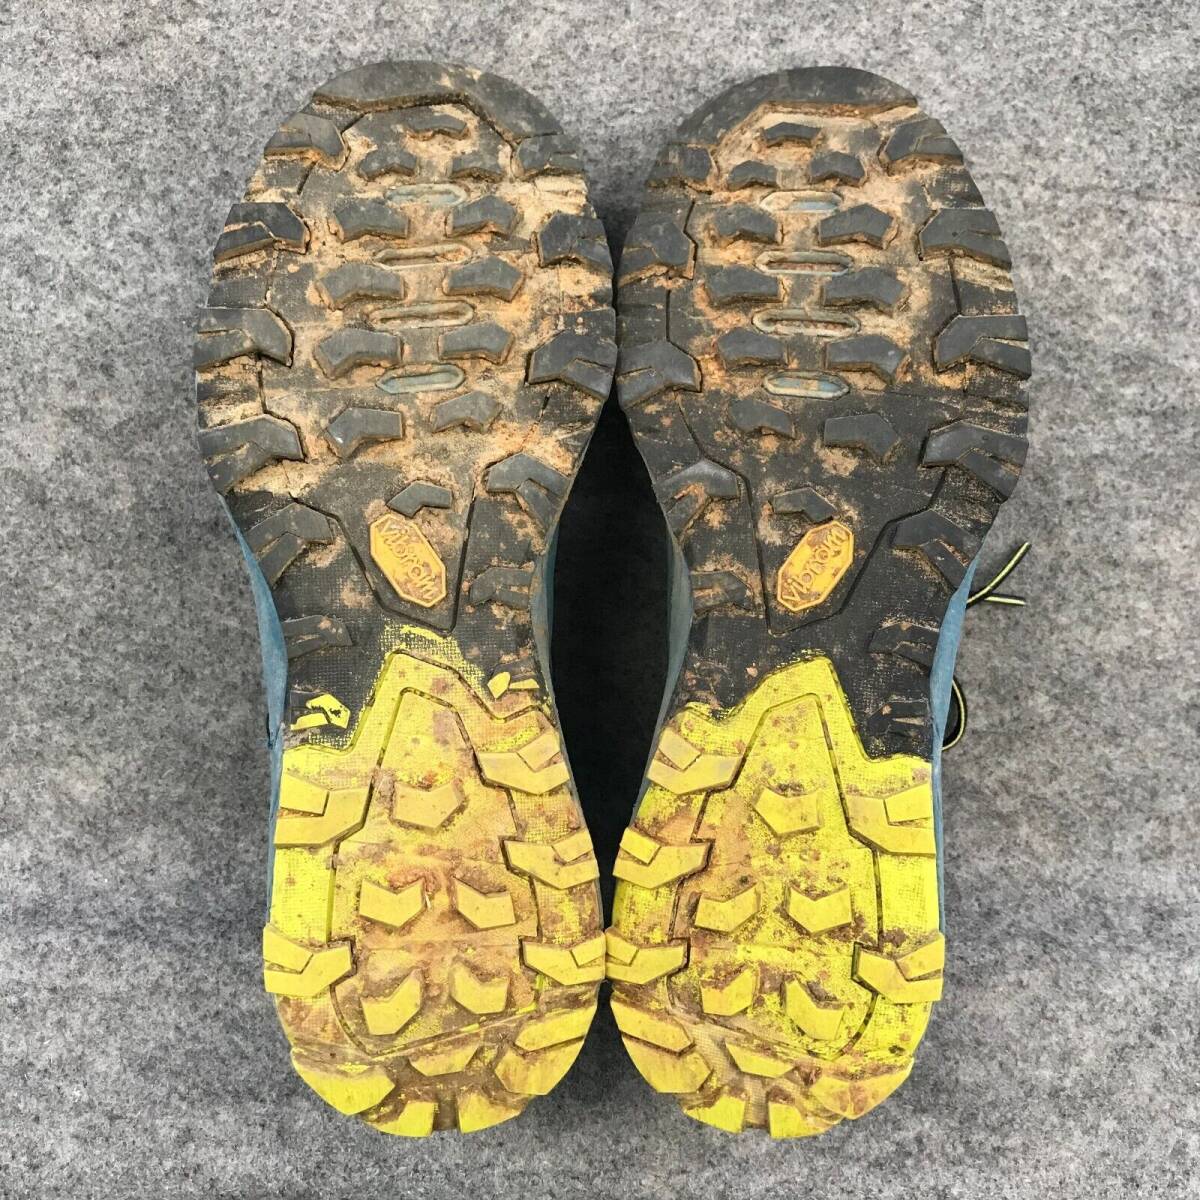 Yahoo!オークション - Scarpa Rapid Hiking Shoes Men's 9.5 Blue 海外...